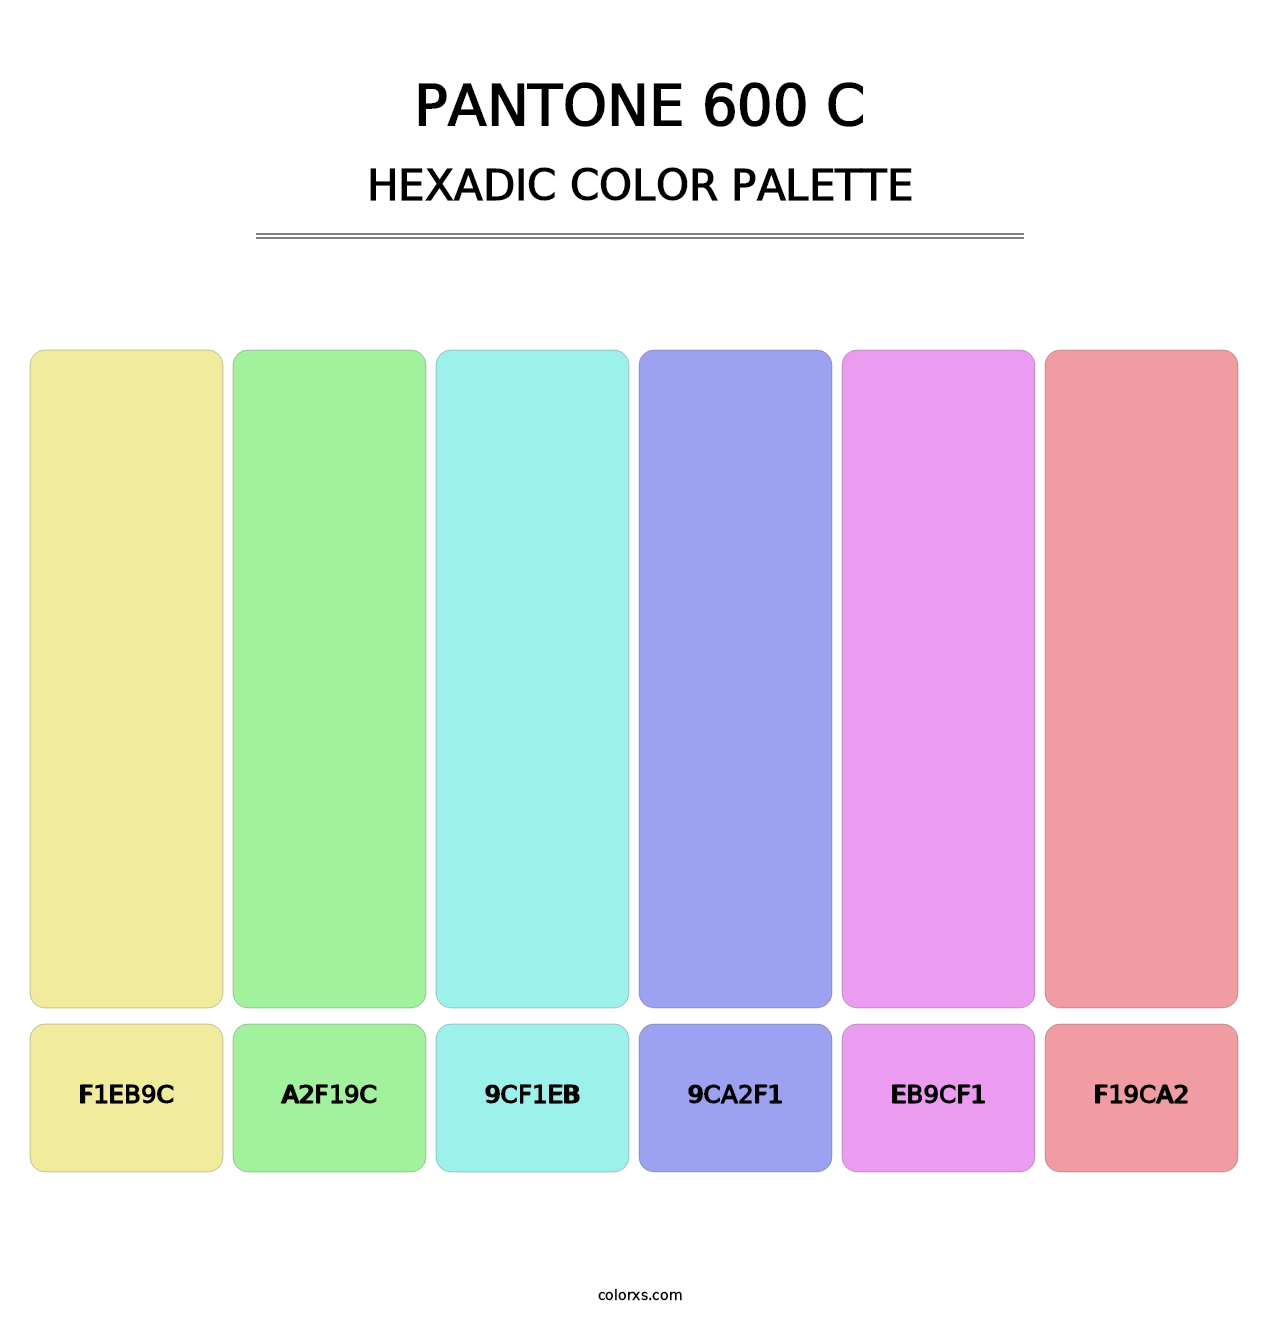 PANTONE 600 C - Hexadic Color Palette